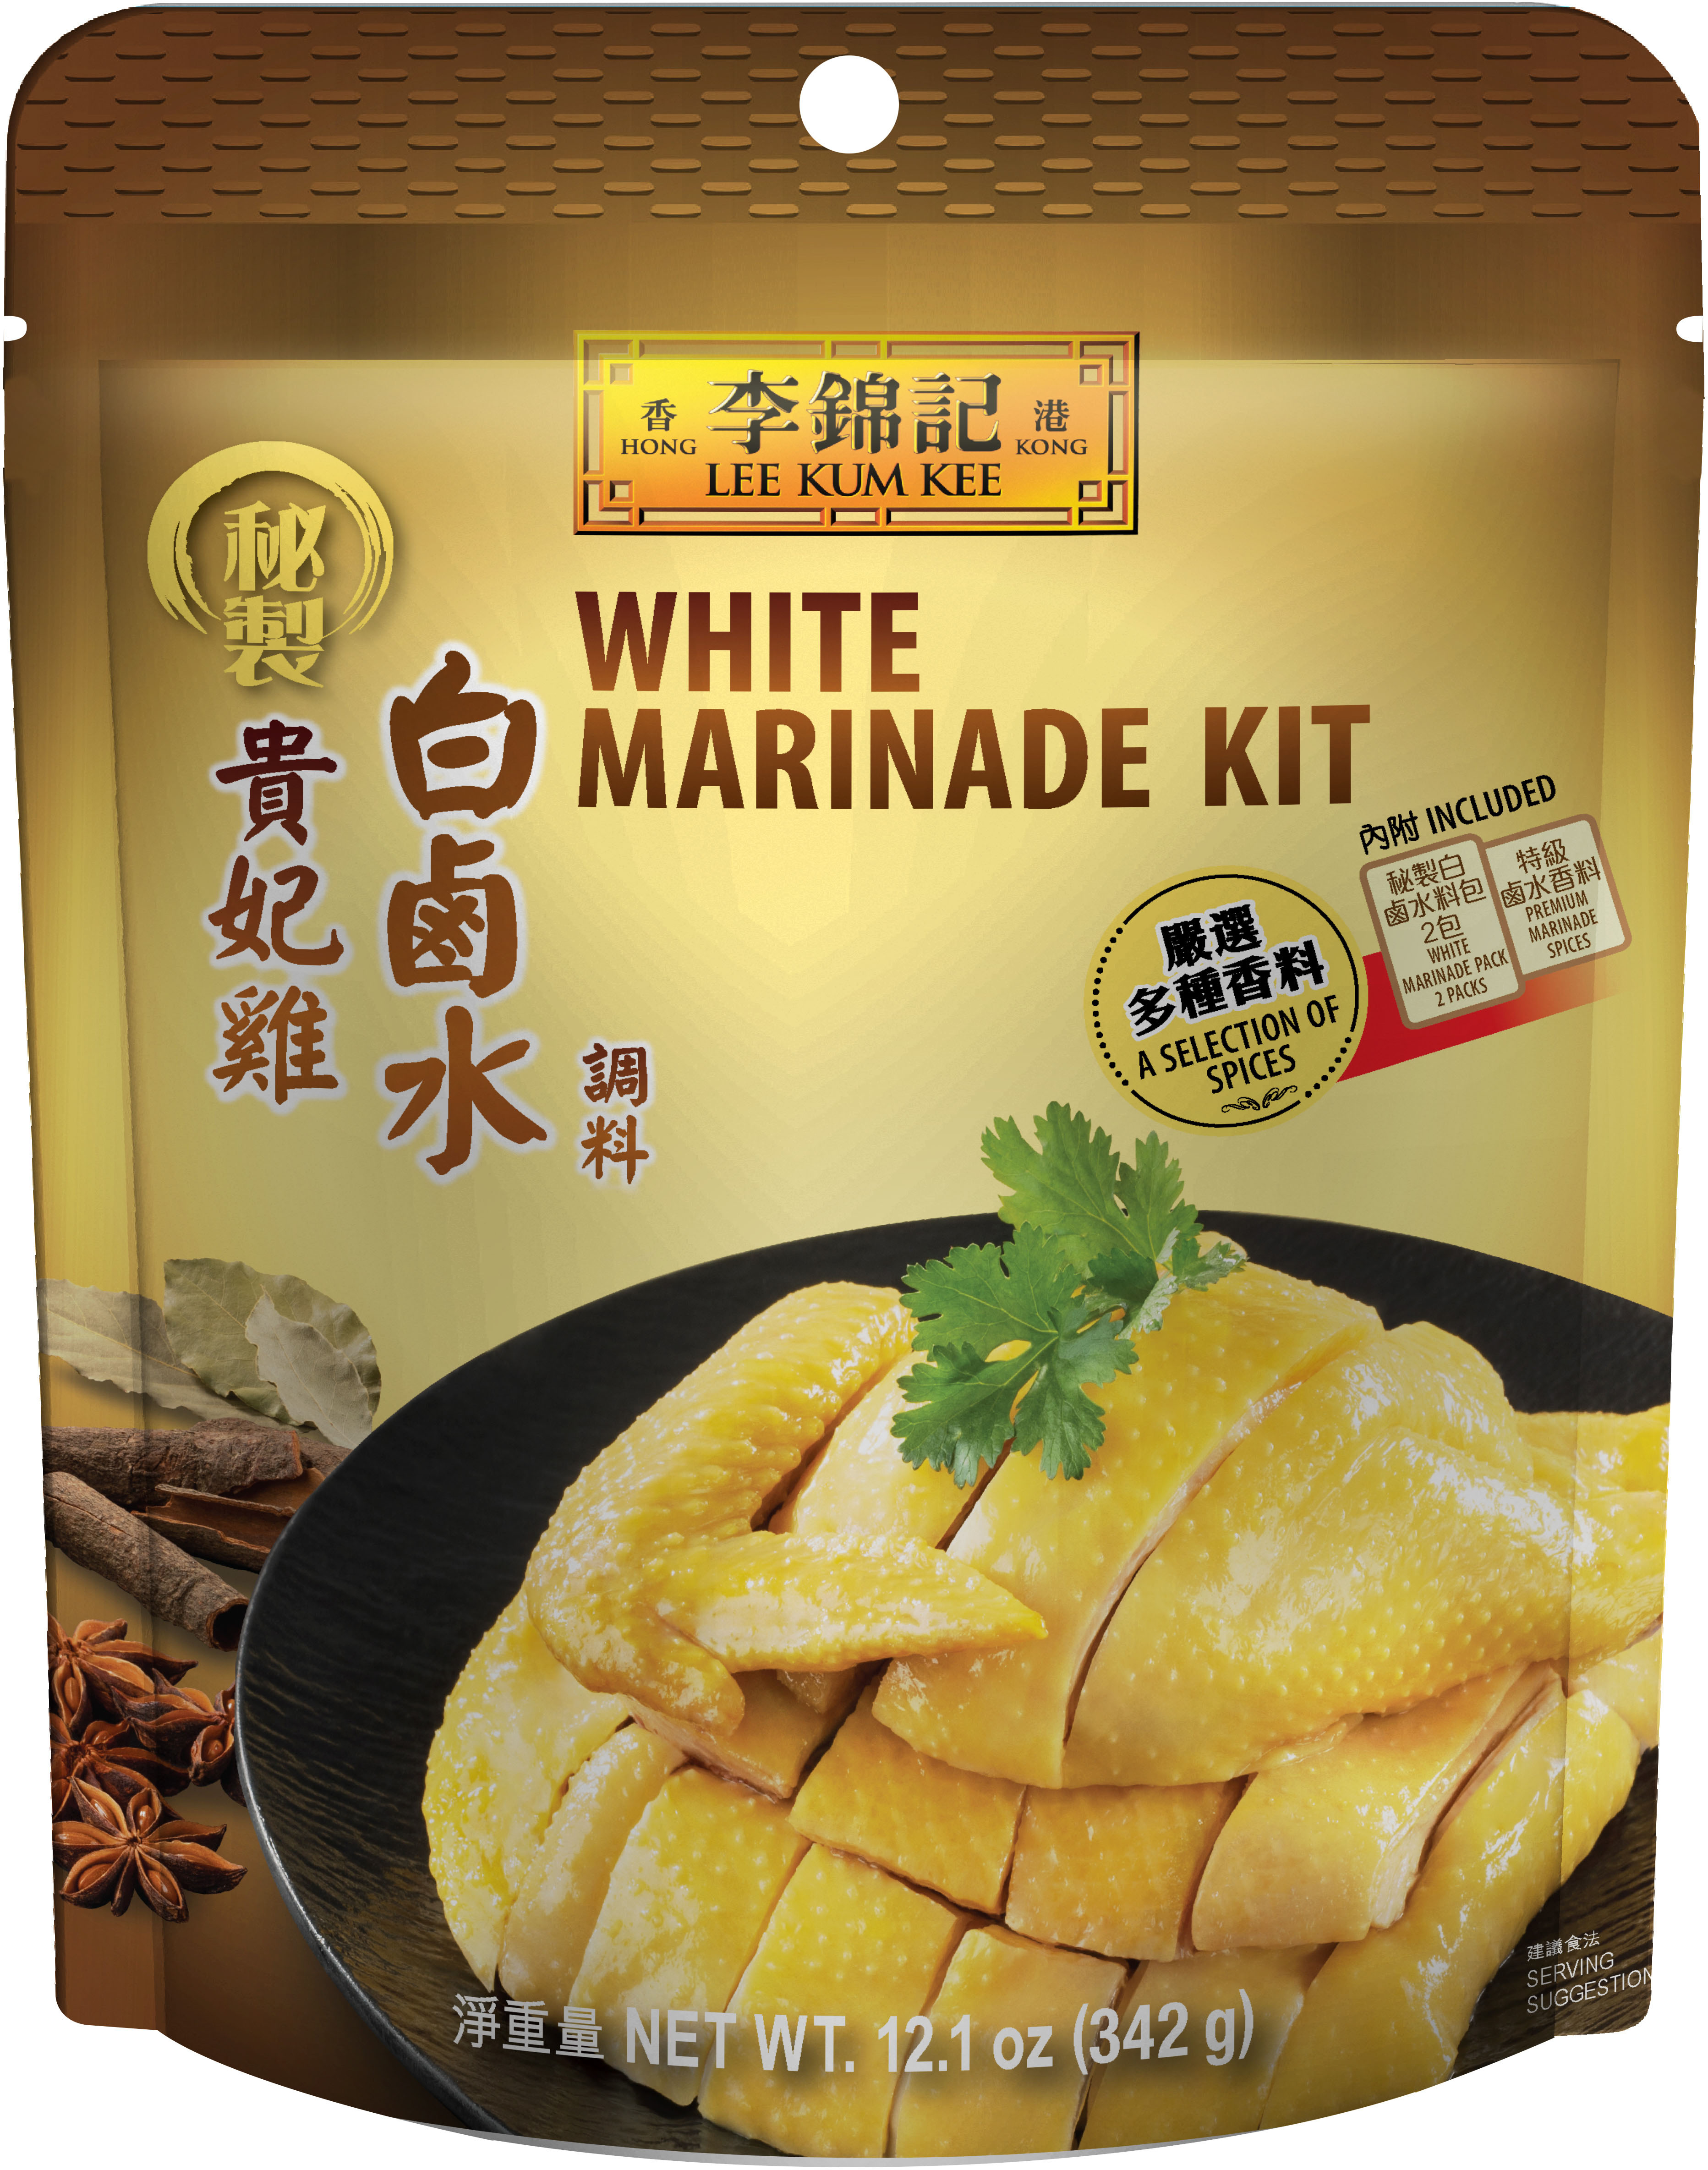 White Marinade Kit, 12.1 oz (342 g), Sauce Pack